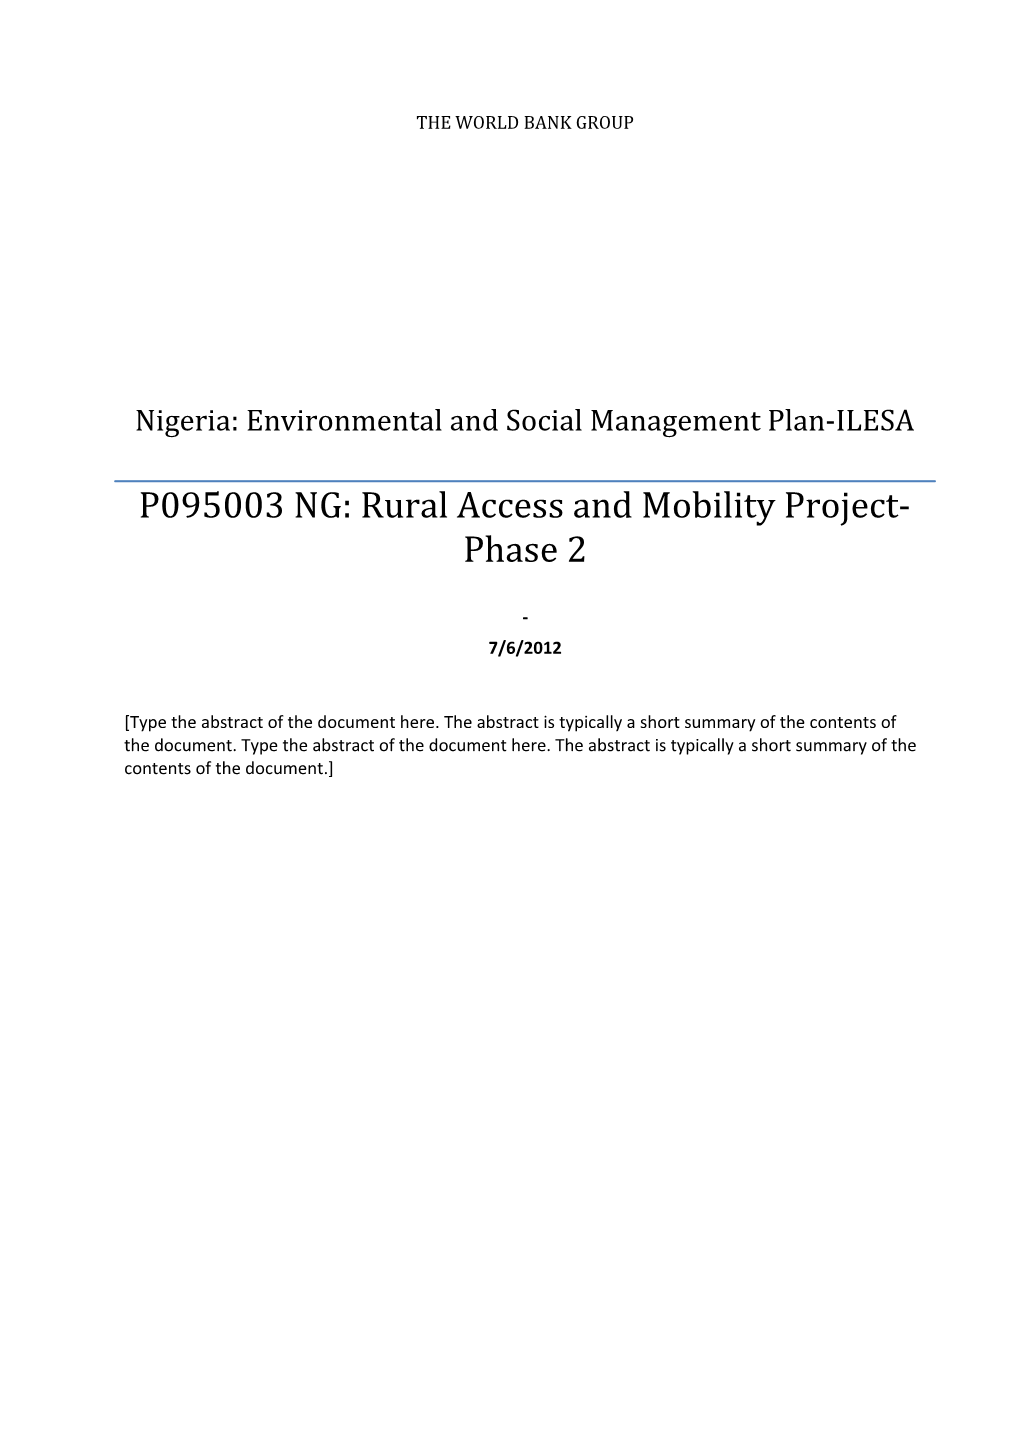 Nigeria: Environmental and Social Management Plan-ILESA